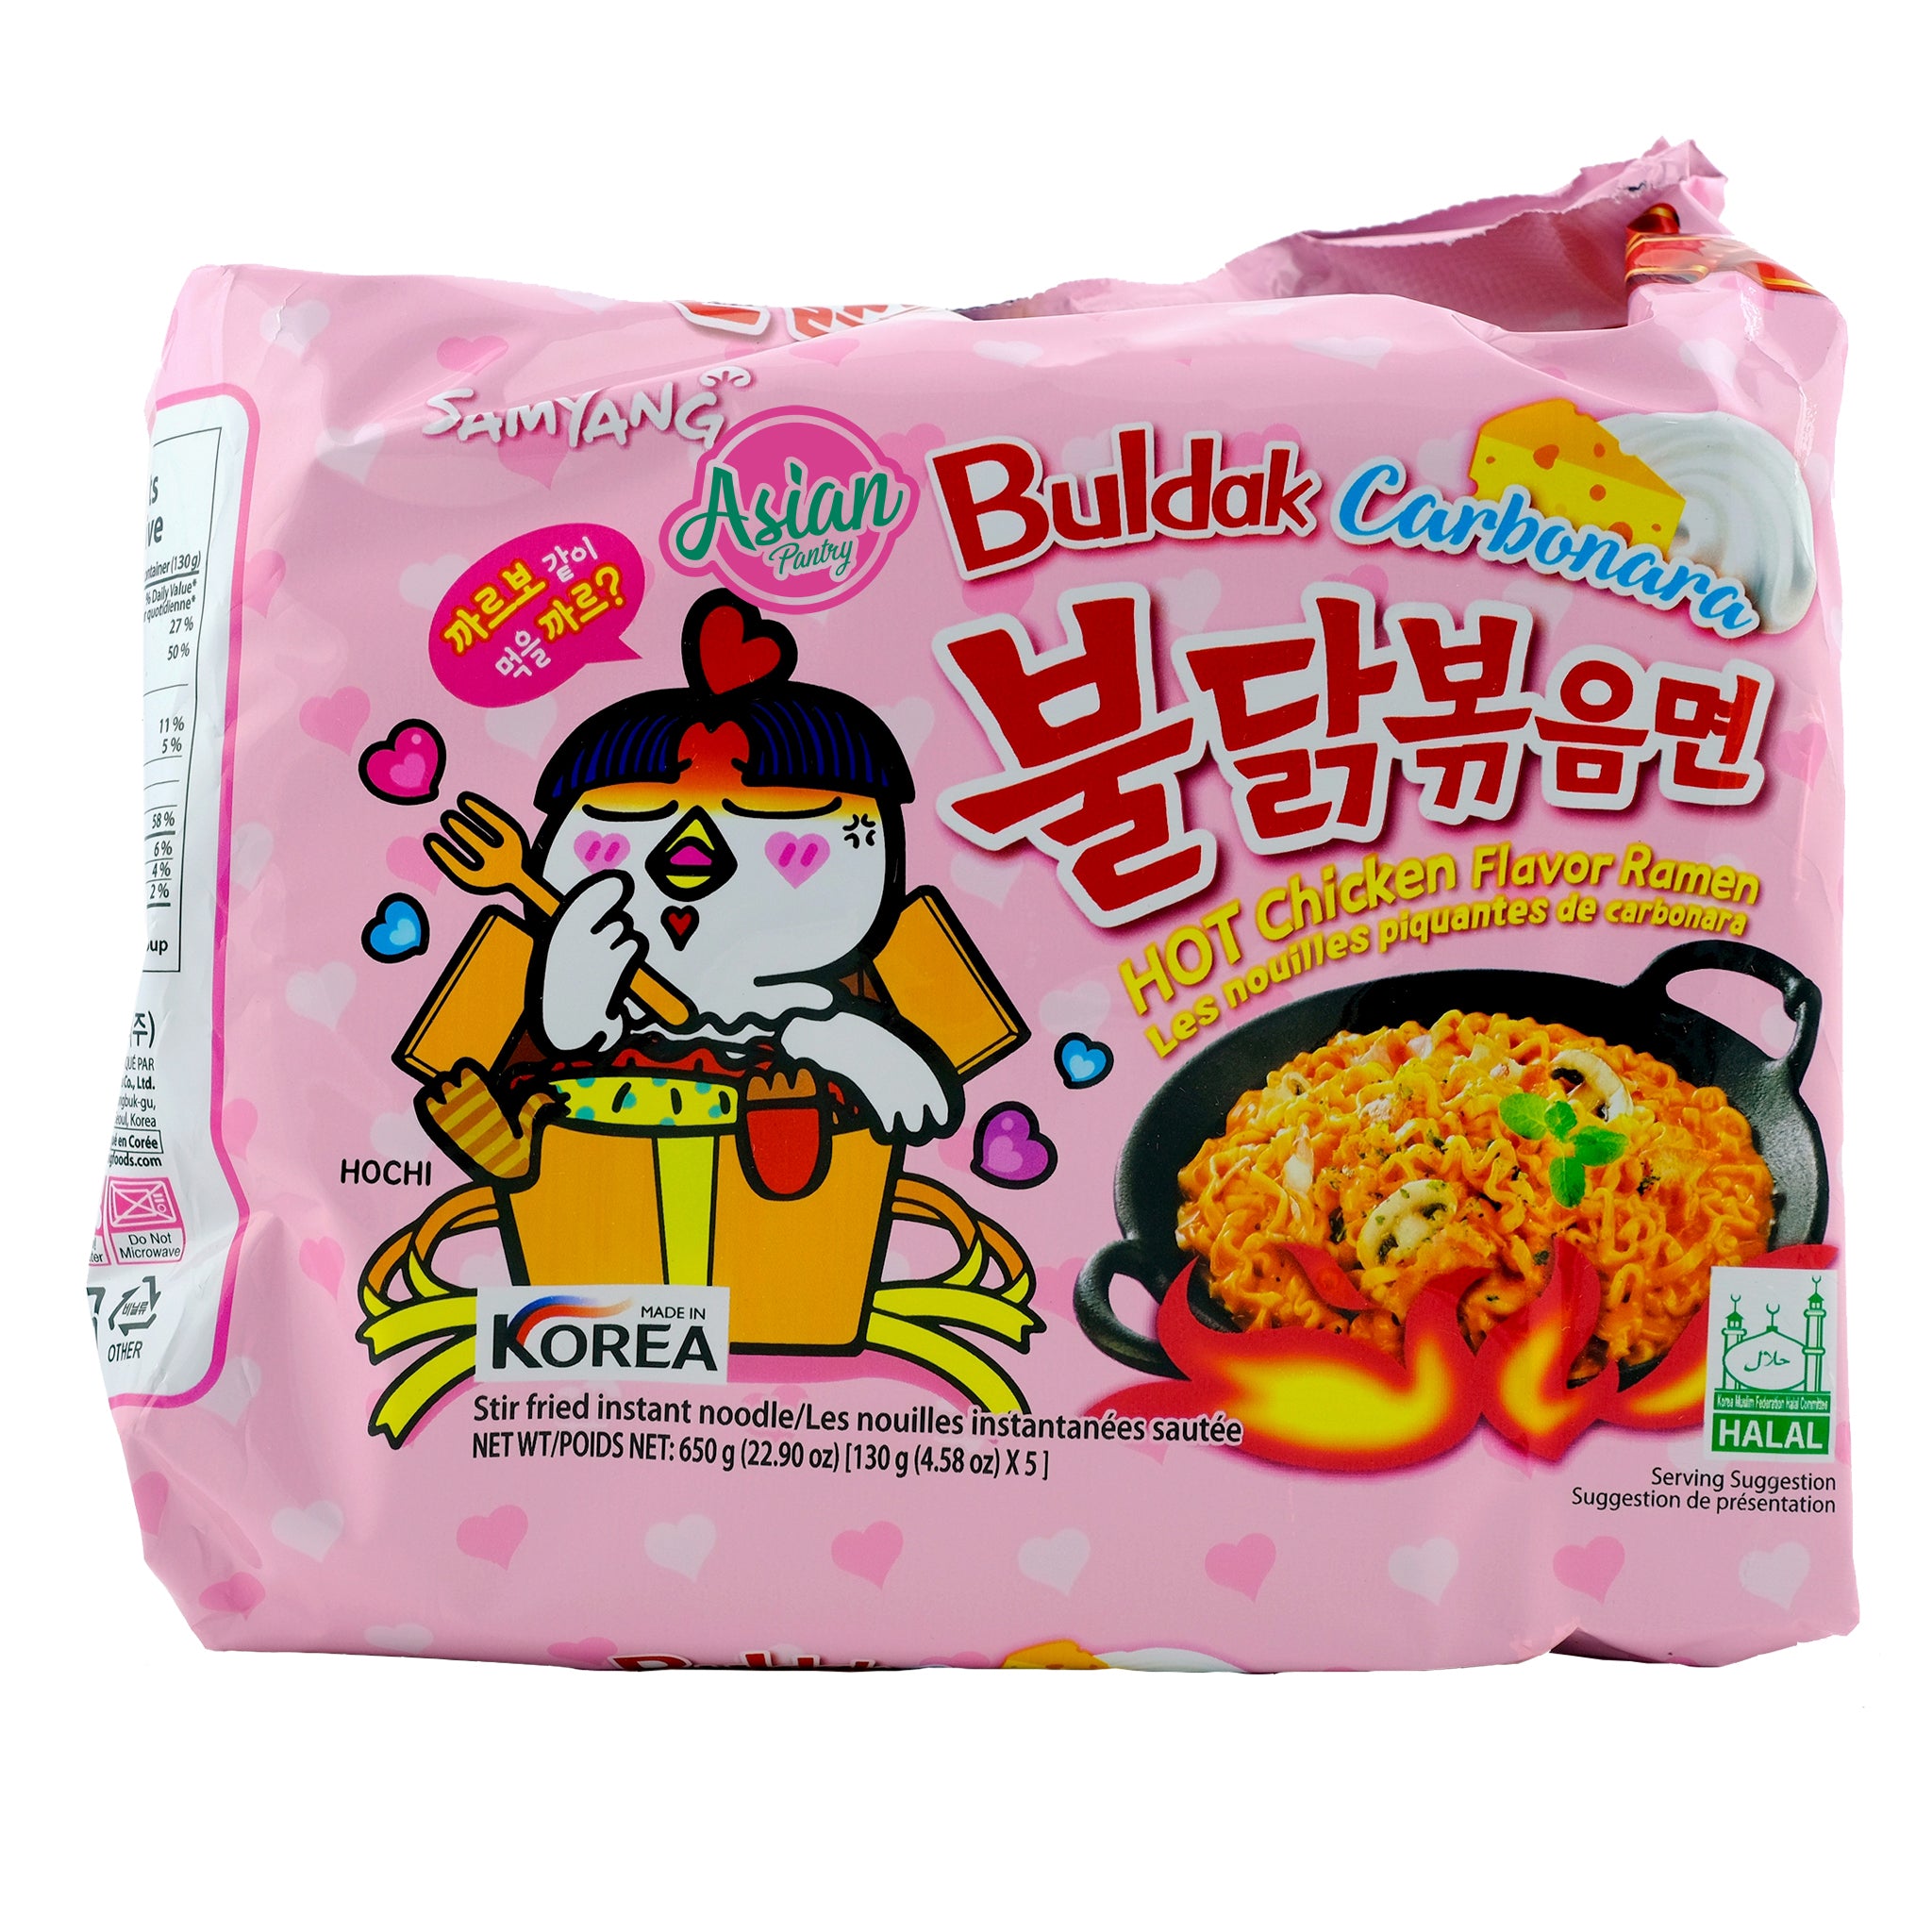 Buy Samyang Buldak Hot Chicken Flavor Ramen Carbonara Bowl 105g Online in  India 